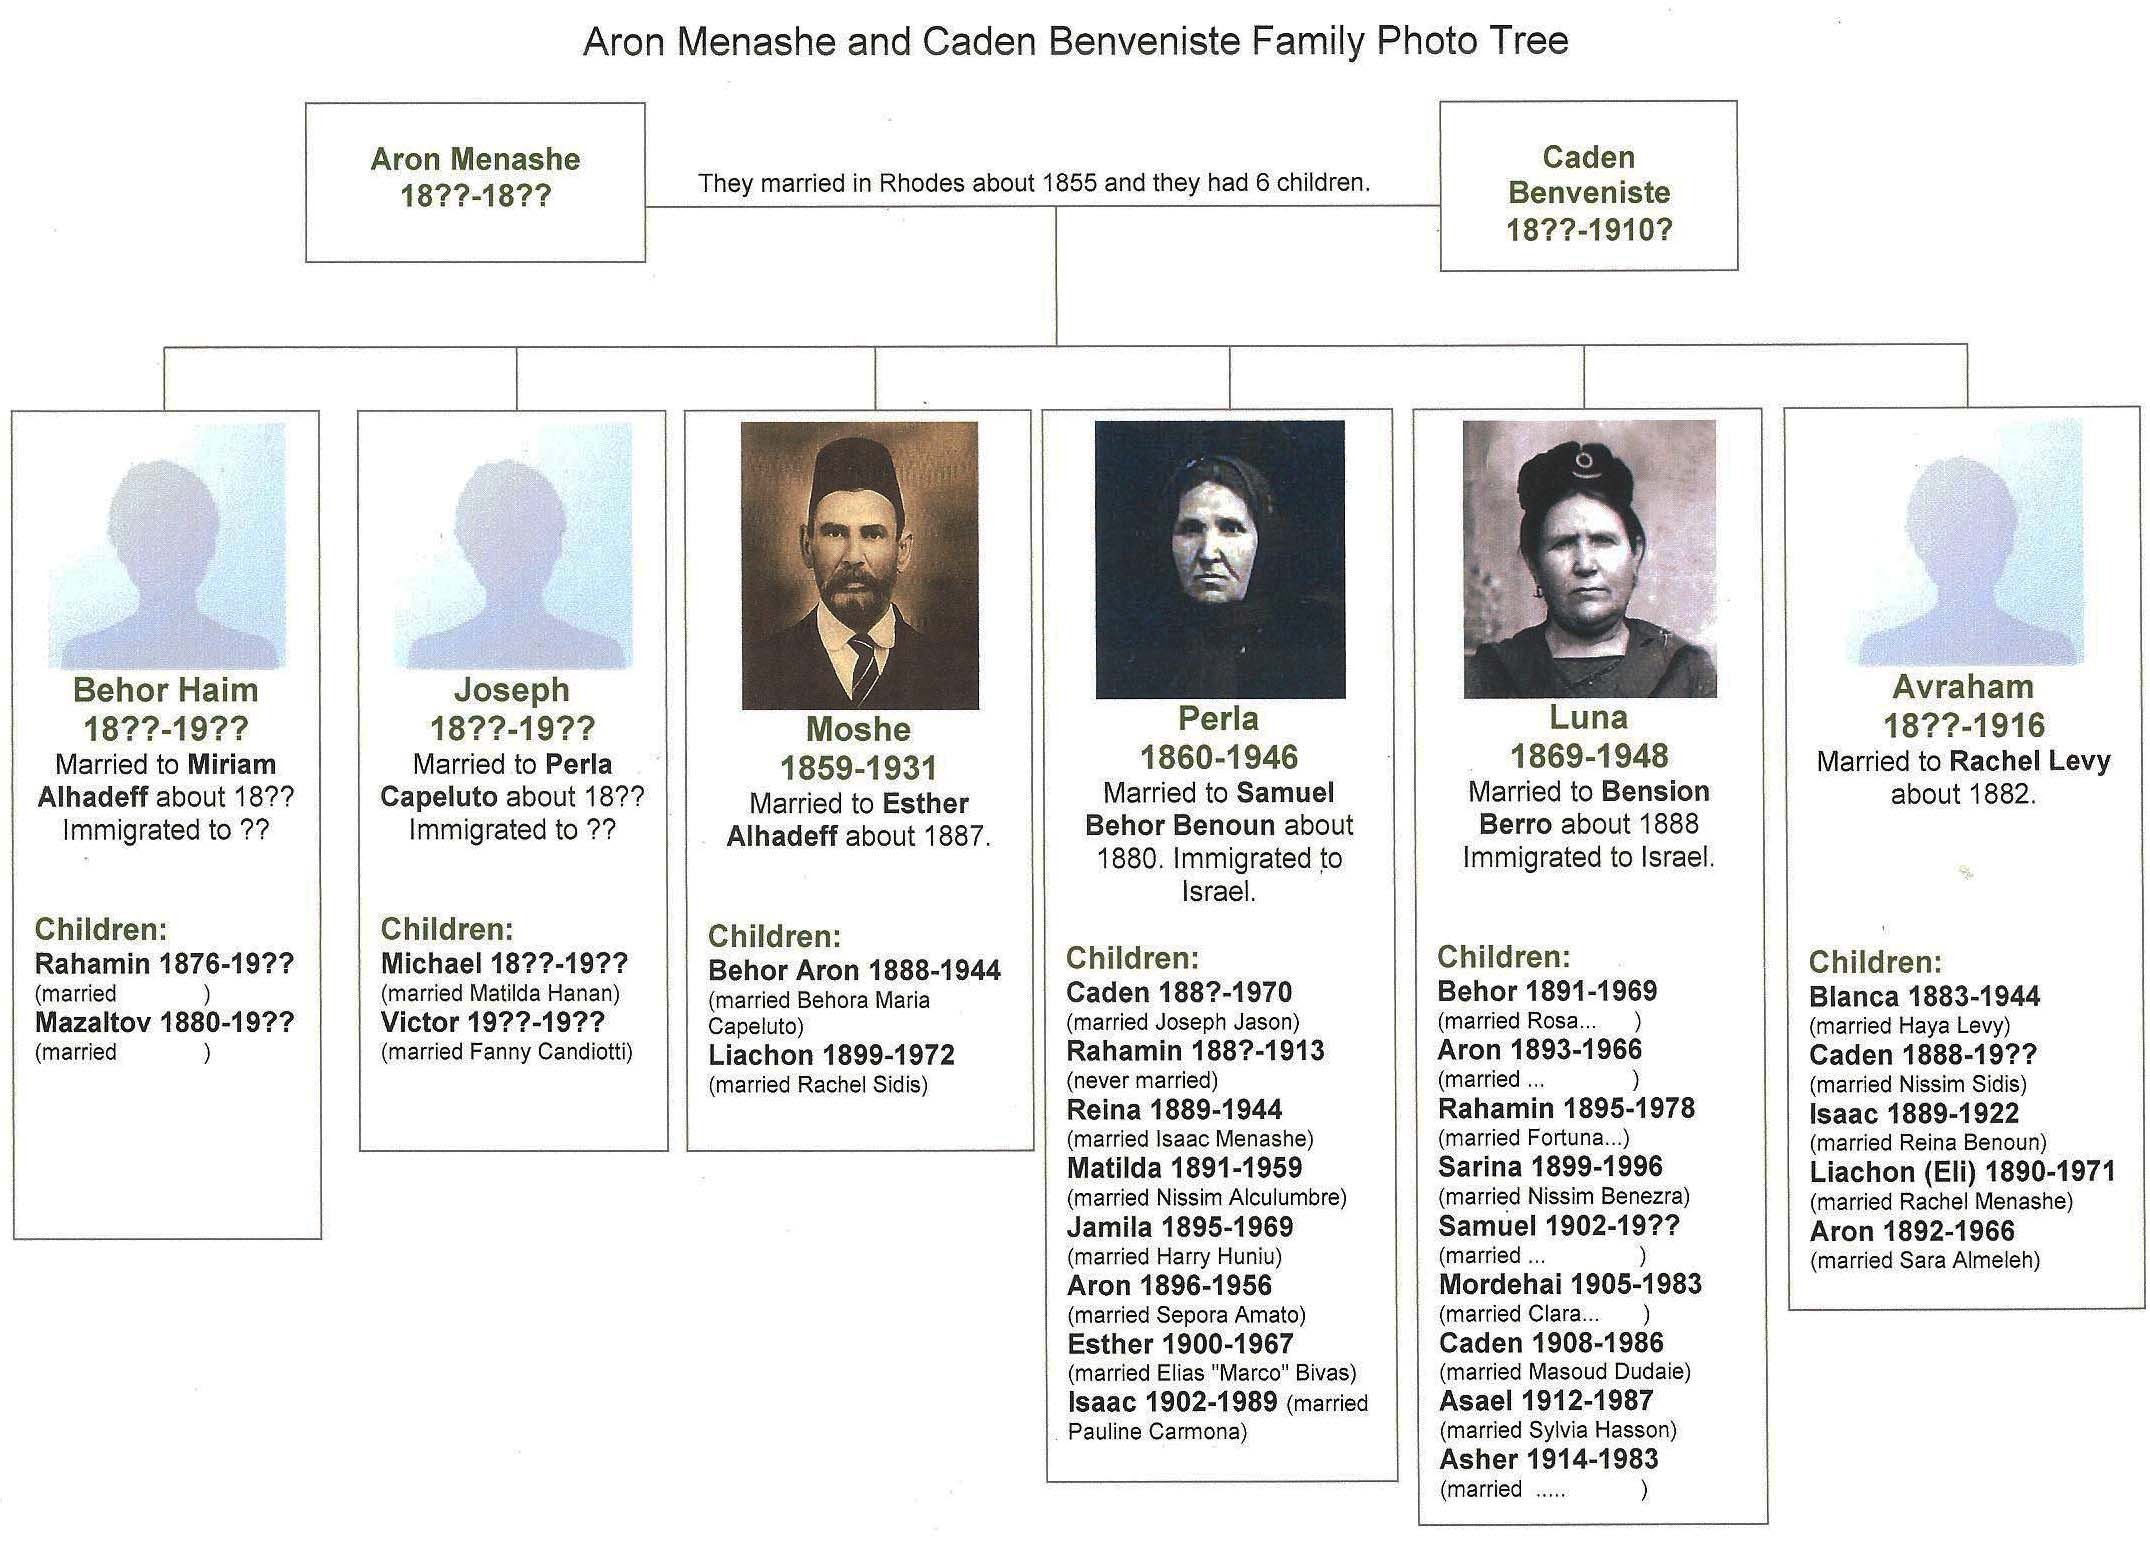 Family Trees, Family Stories & Family Photos: